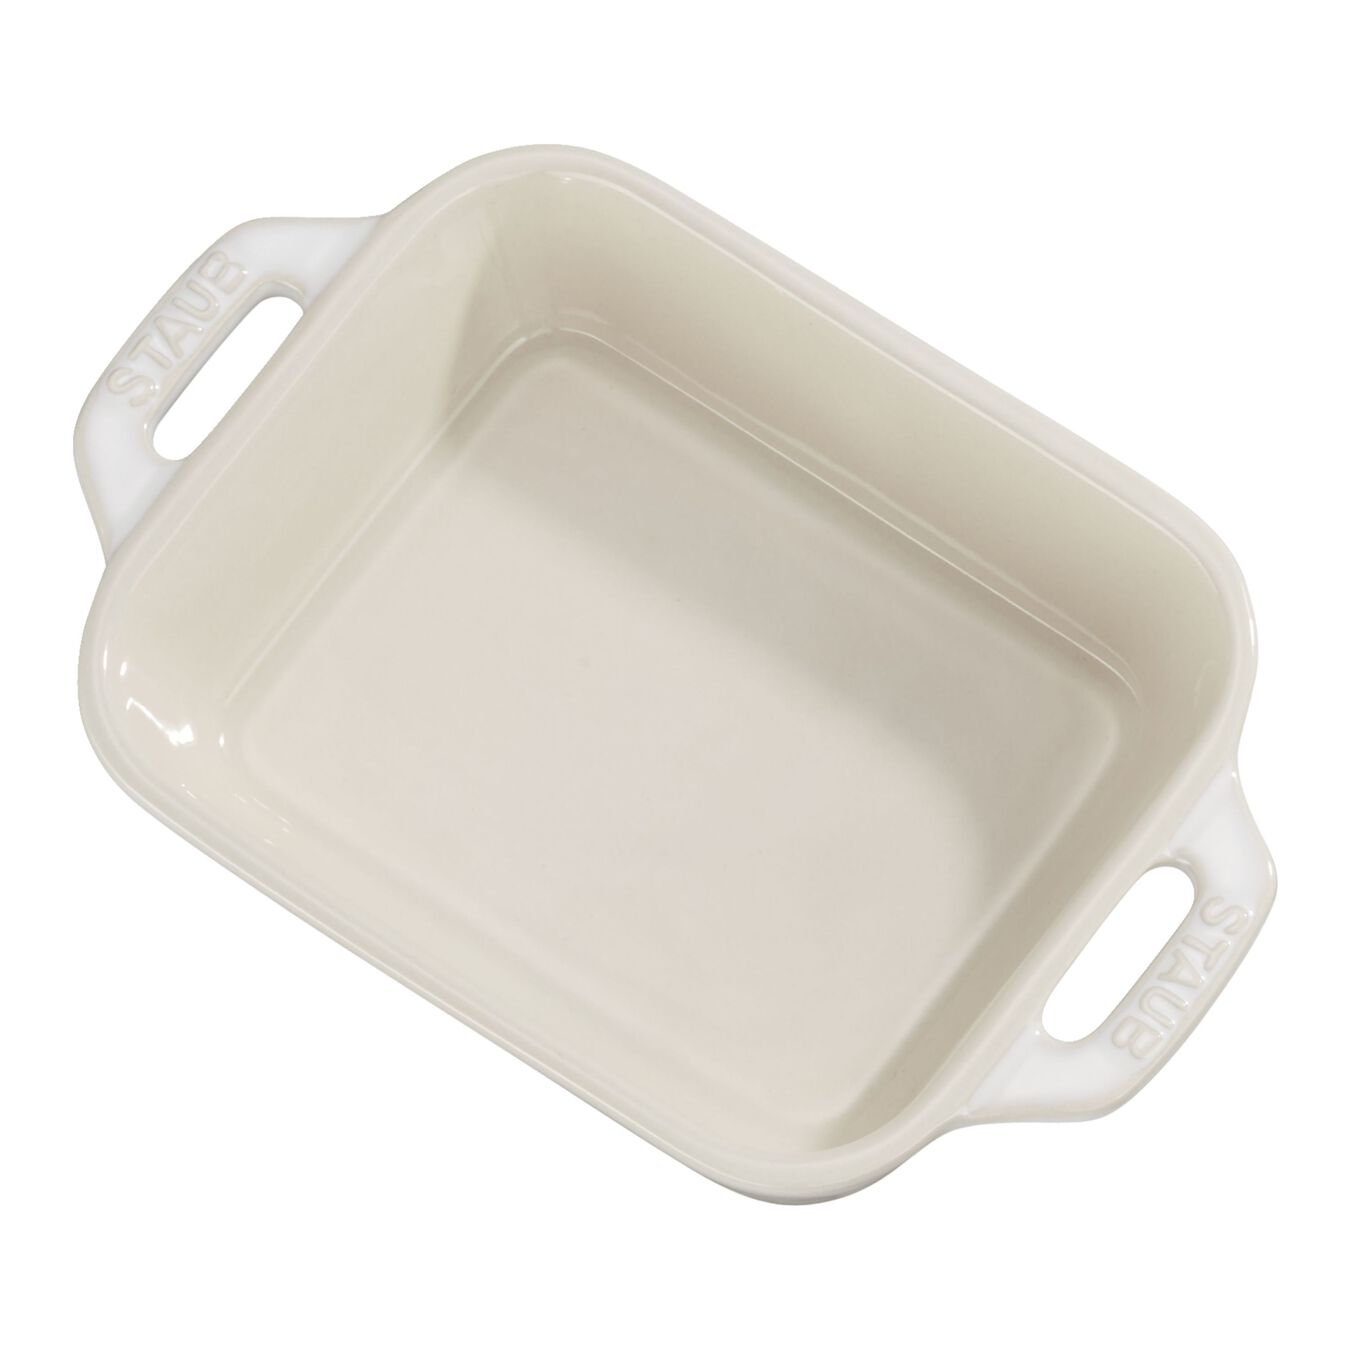 19 cm x 12 cm rectangular Ceramic Oven dish ivory-white,,large 1